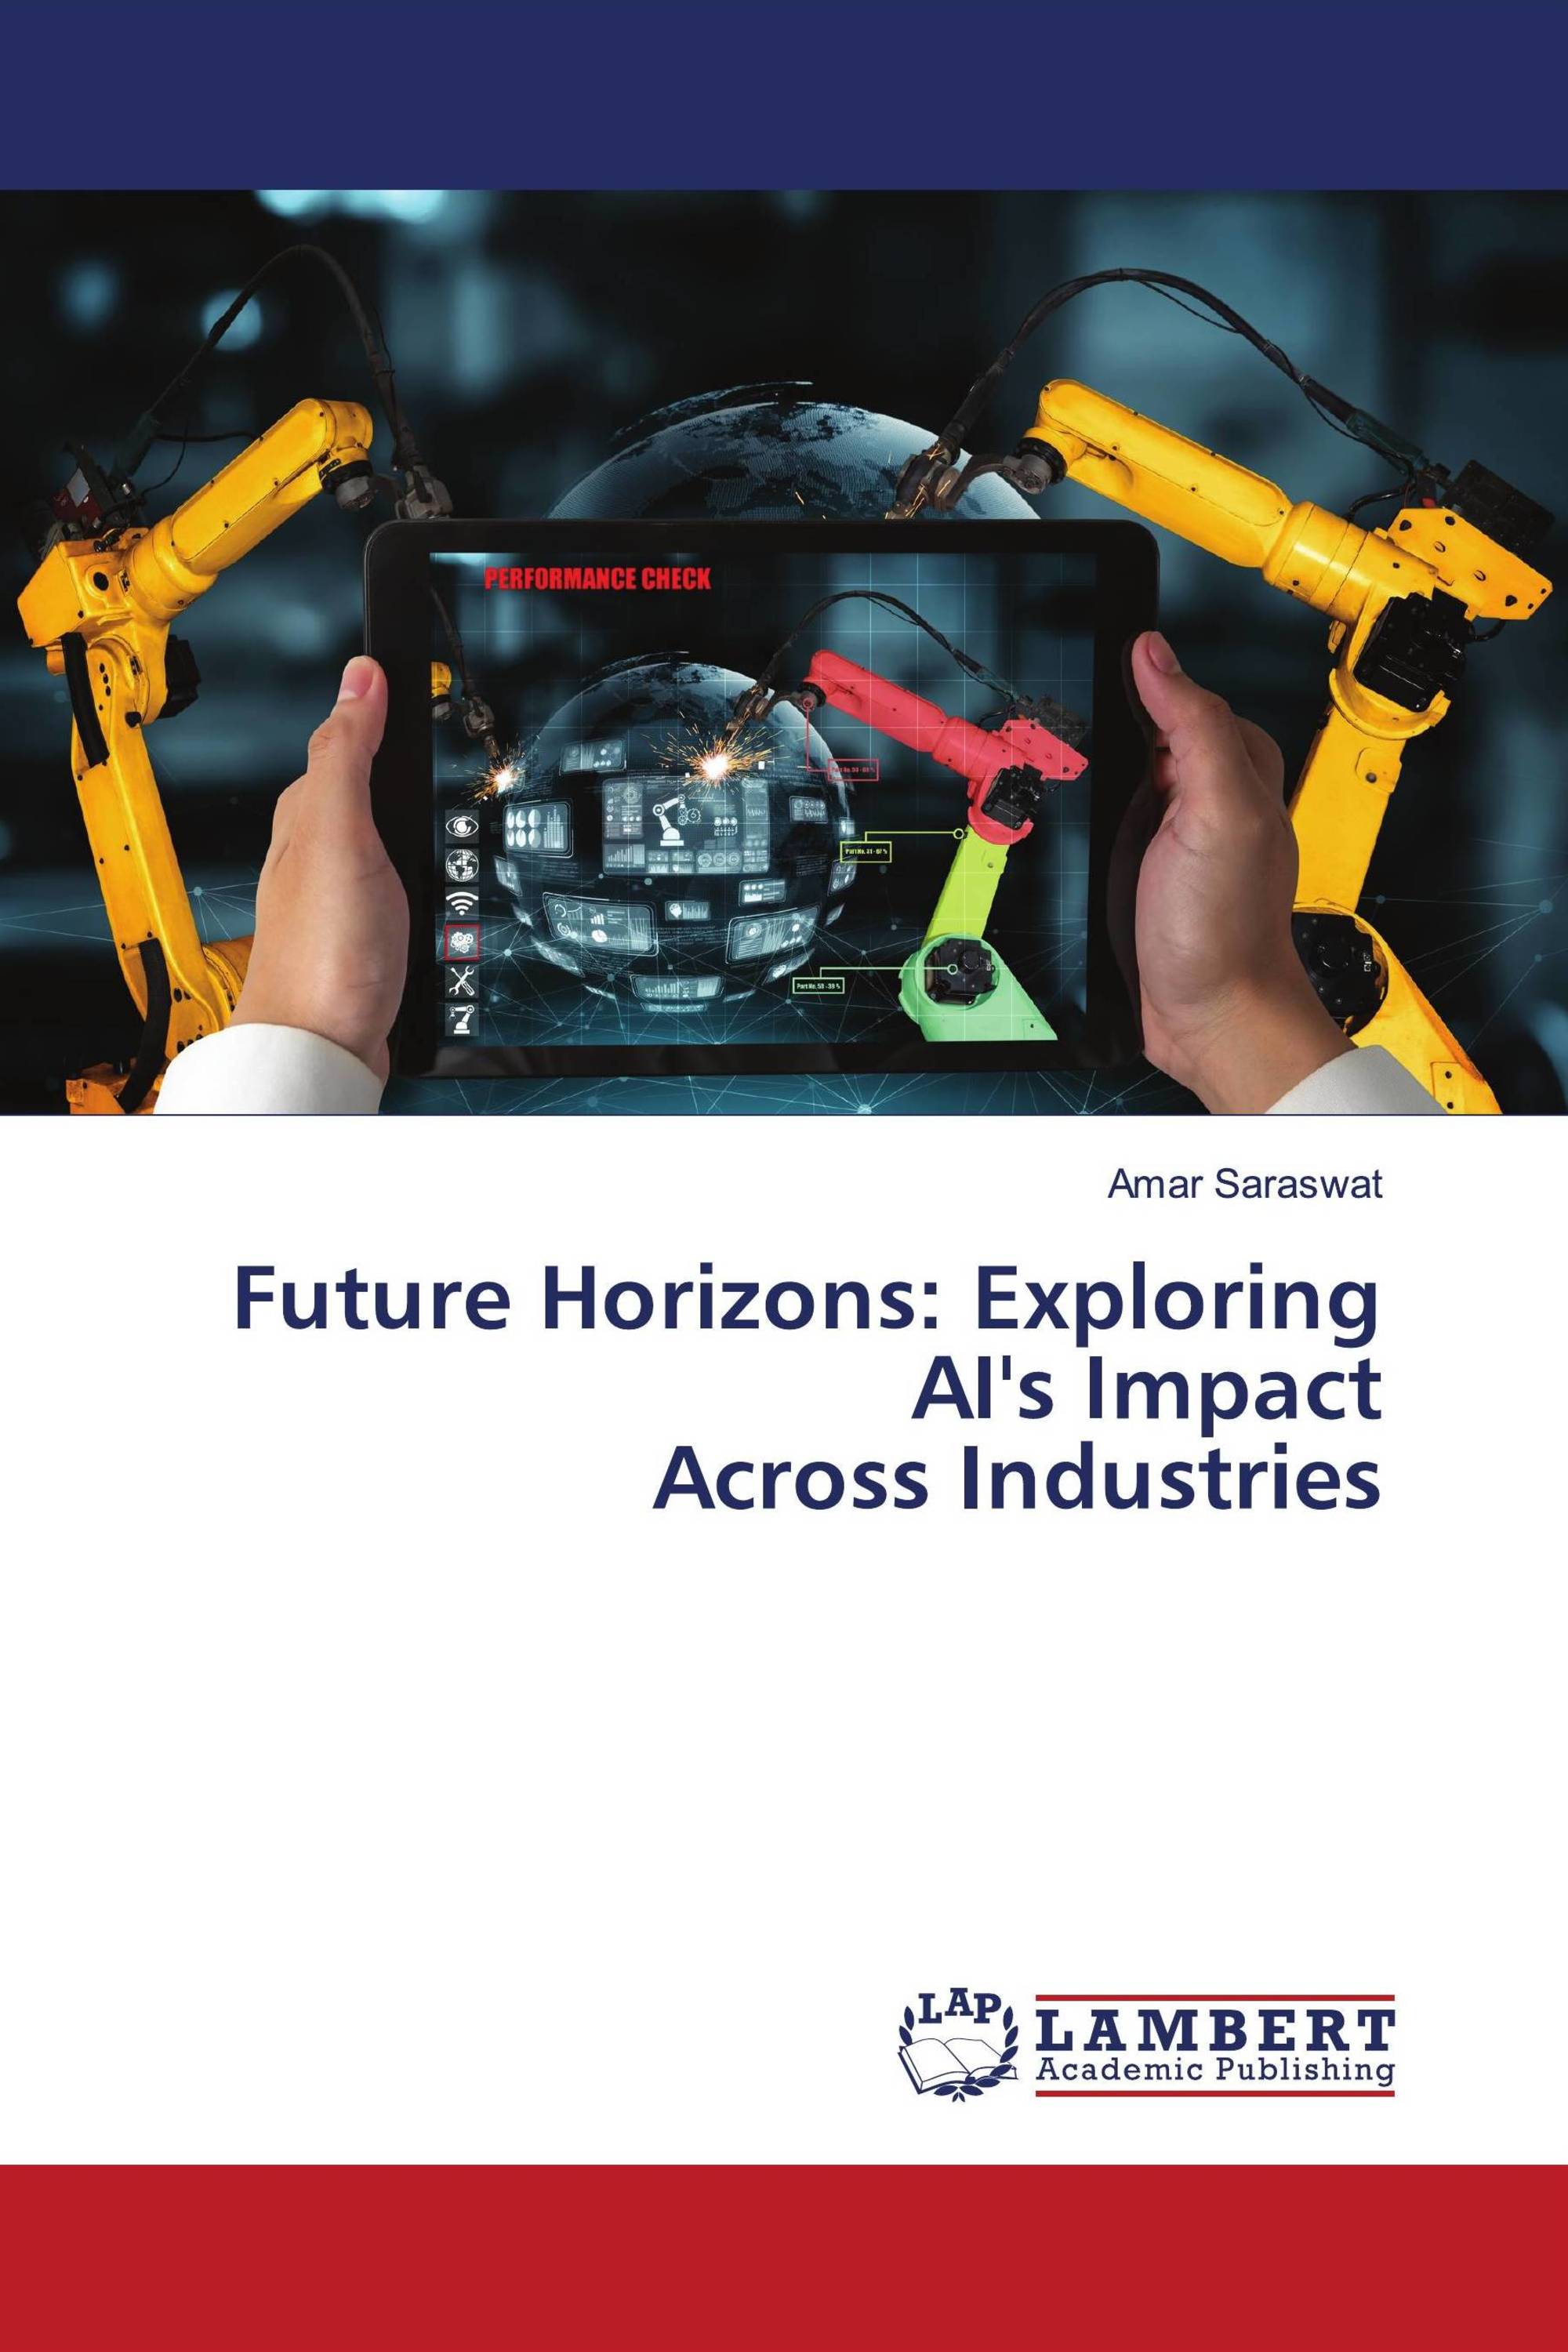 Future Horizons: Exploring AI's Impact Across Industries